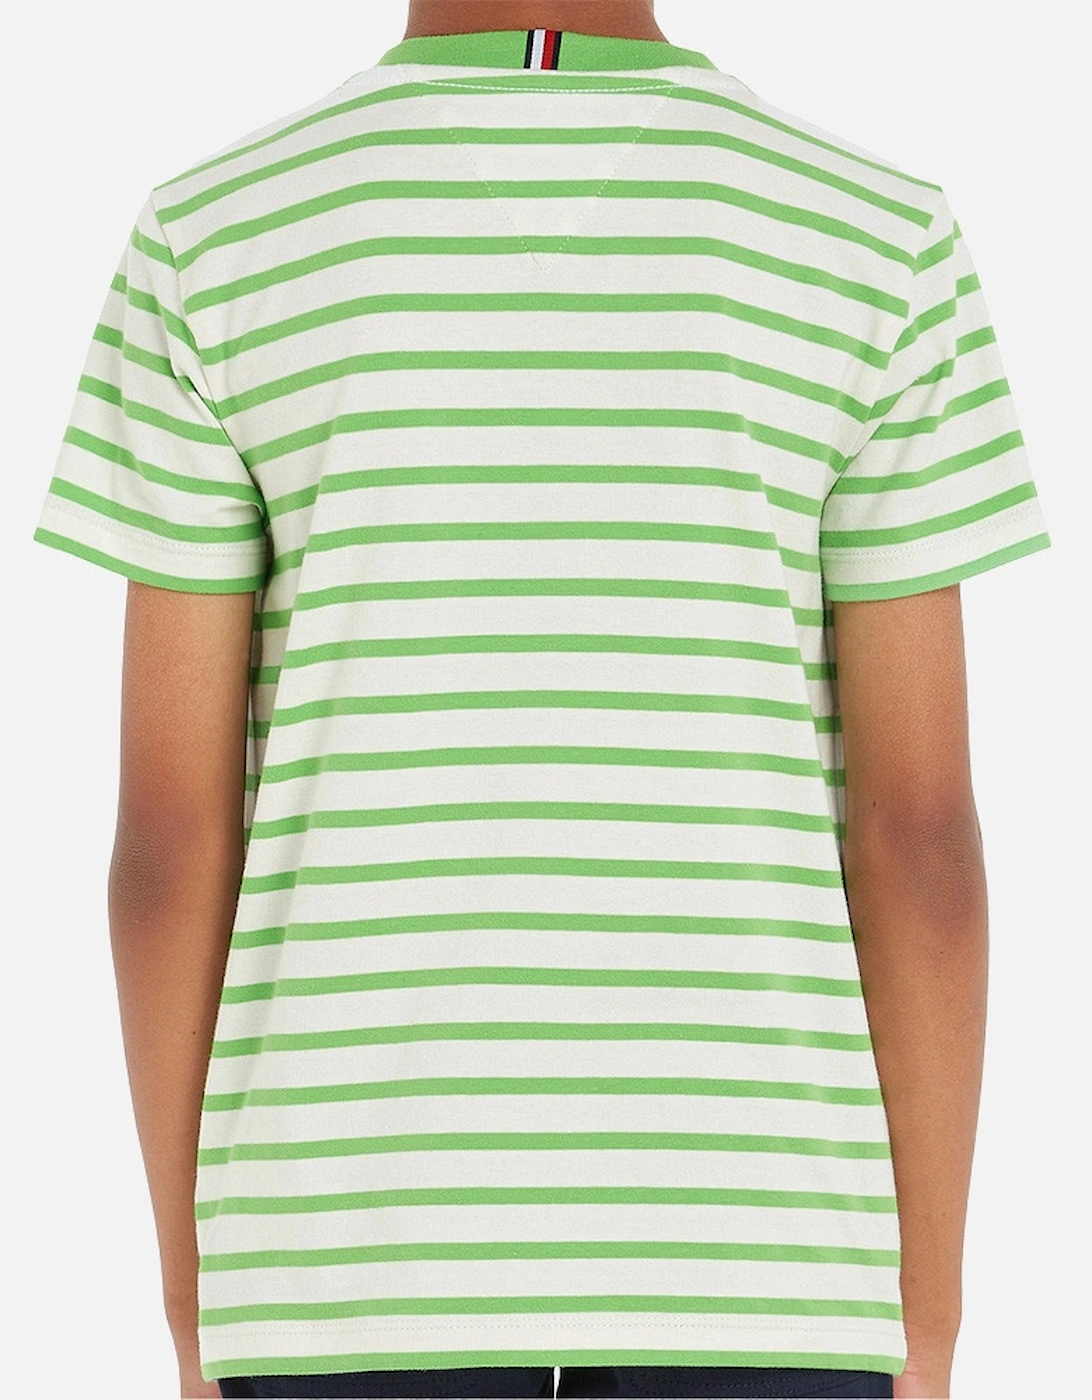 Juniors Striped Pocket T-Shirt (Lime)